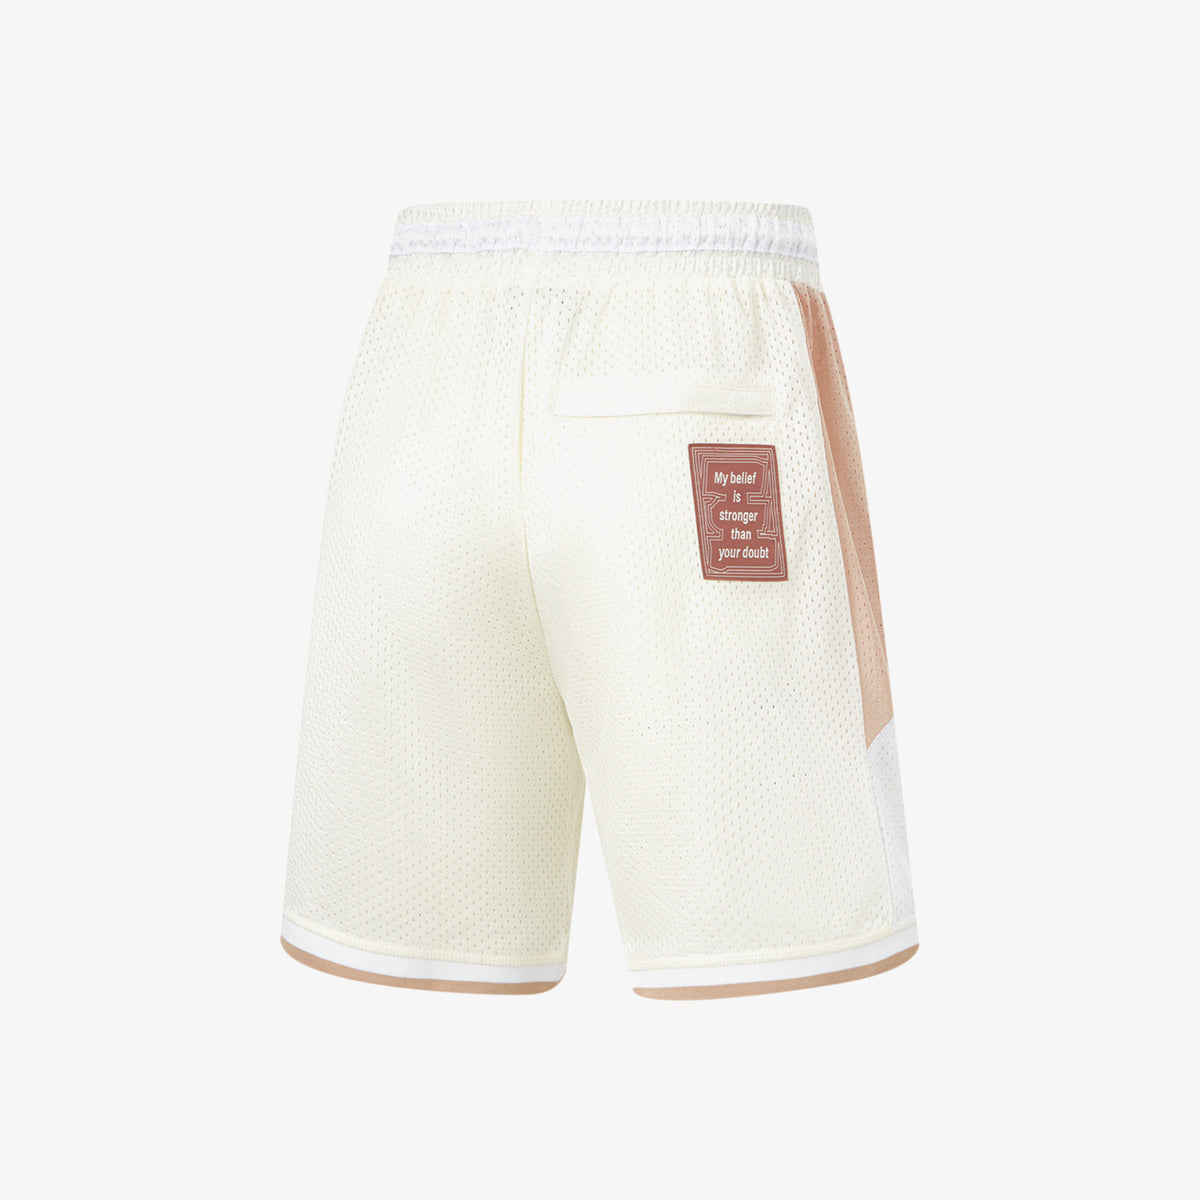 Wade Hall Of Fame Mesh Shorts - Cream